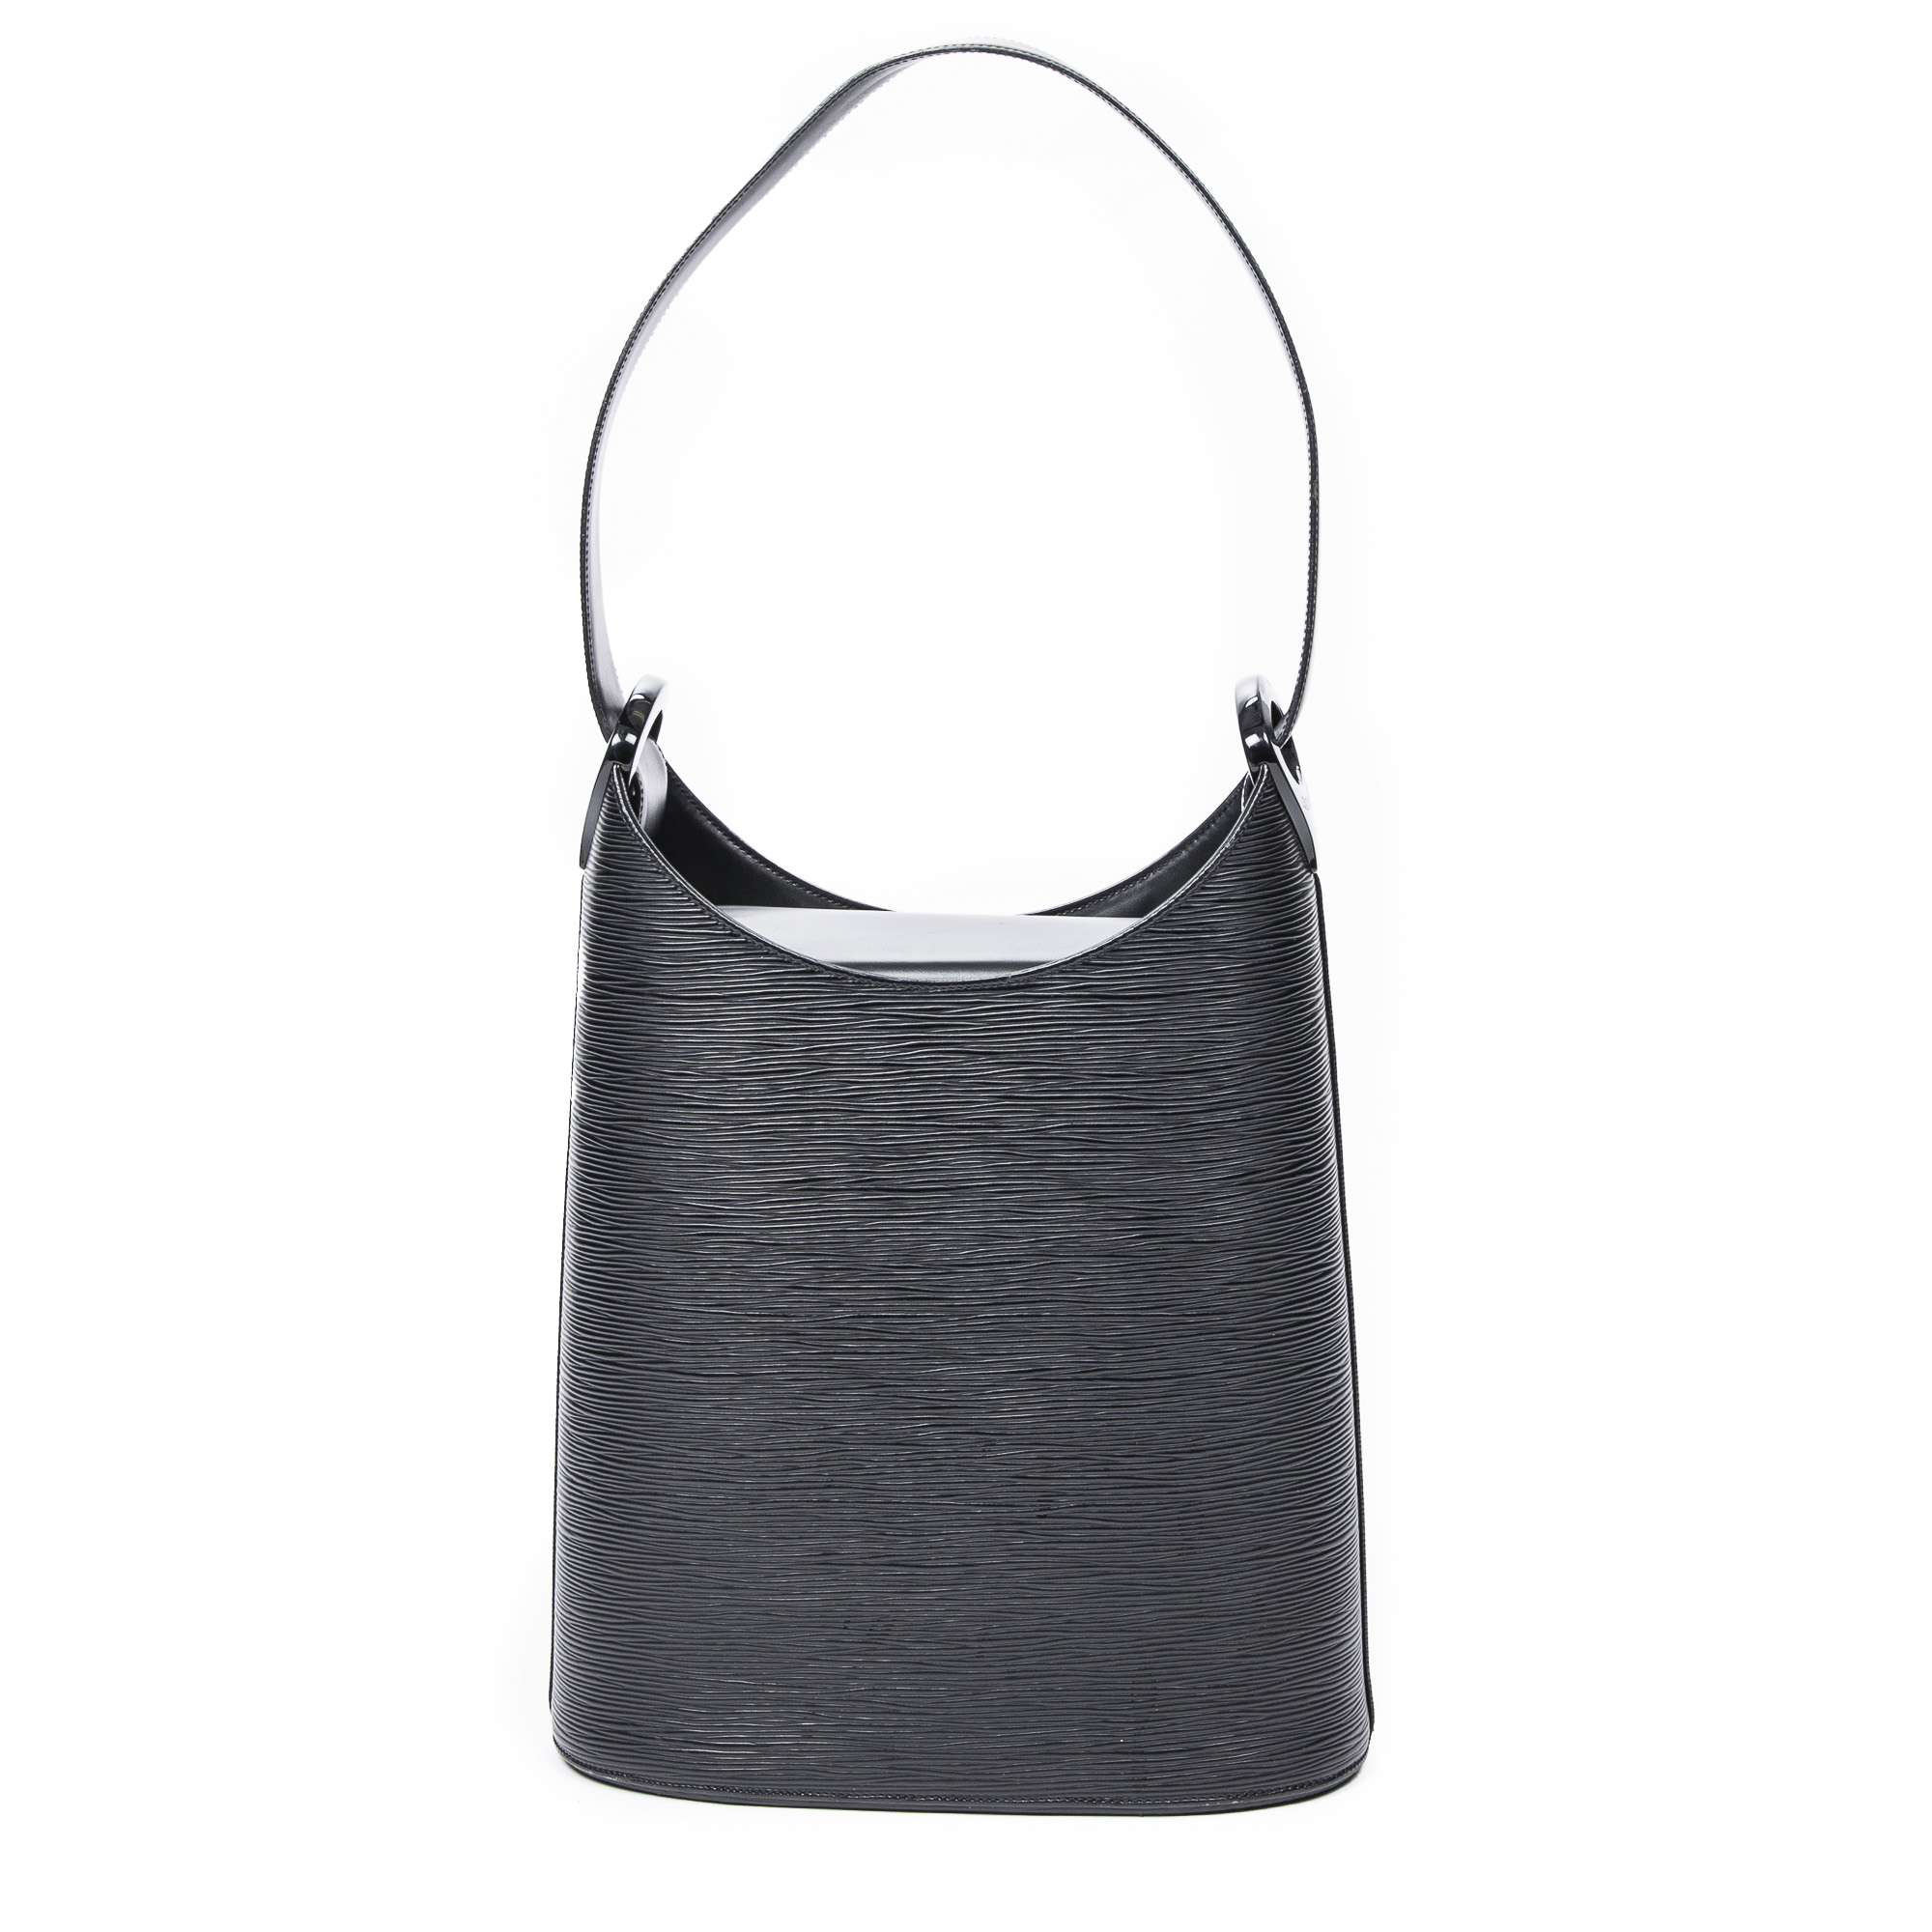 Black Louis Vuitton Epi Sac Verseau Shoulder Bag